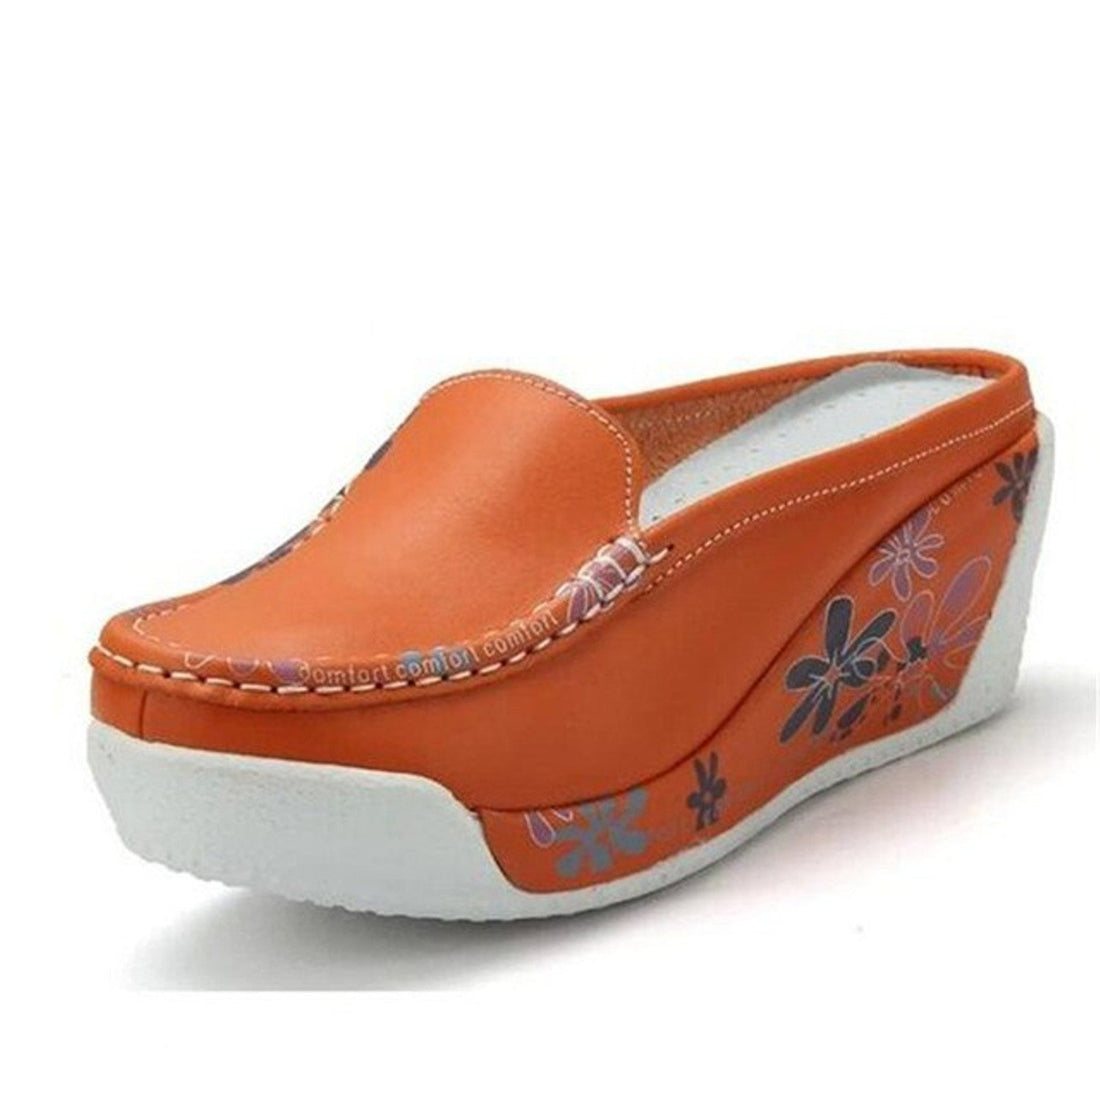 Women's Spring/Summer Platform Shoes With Flower Print